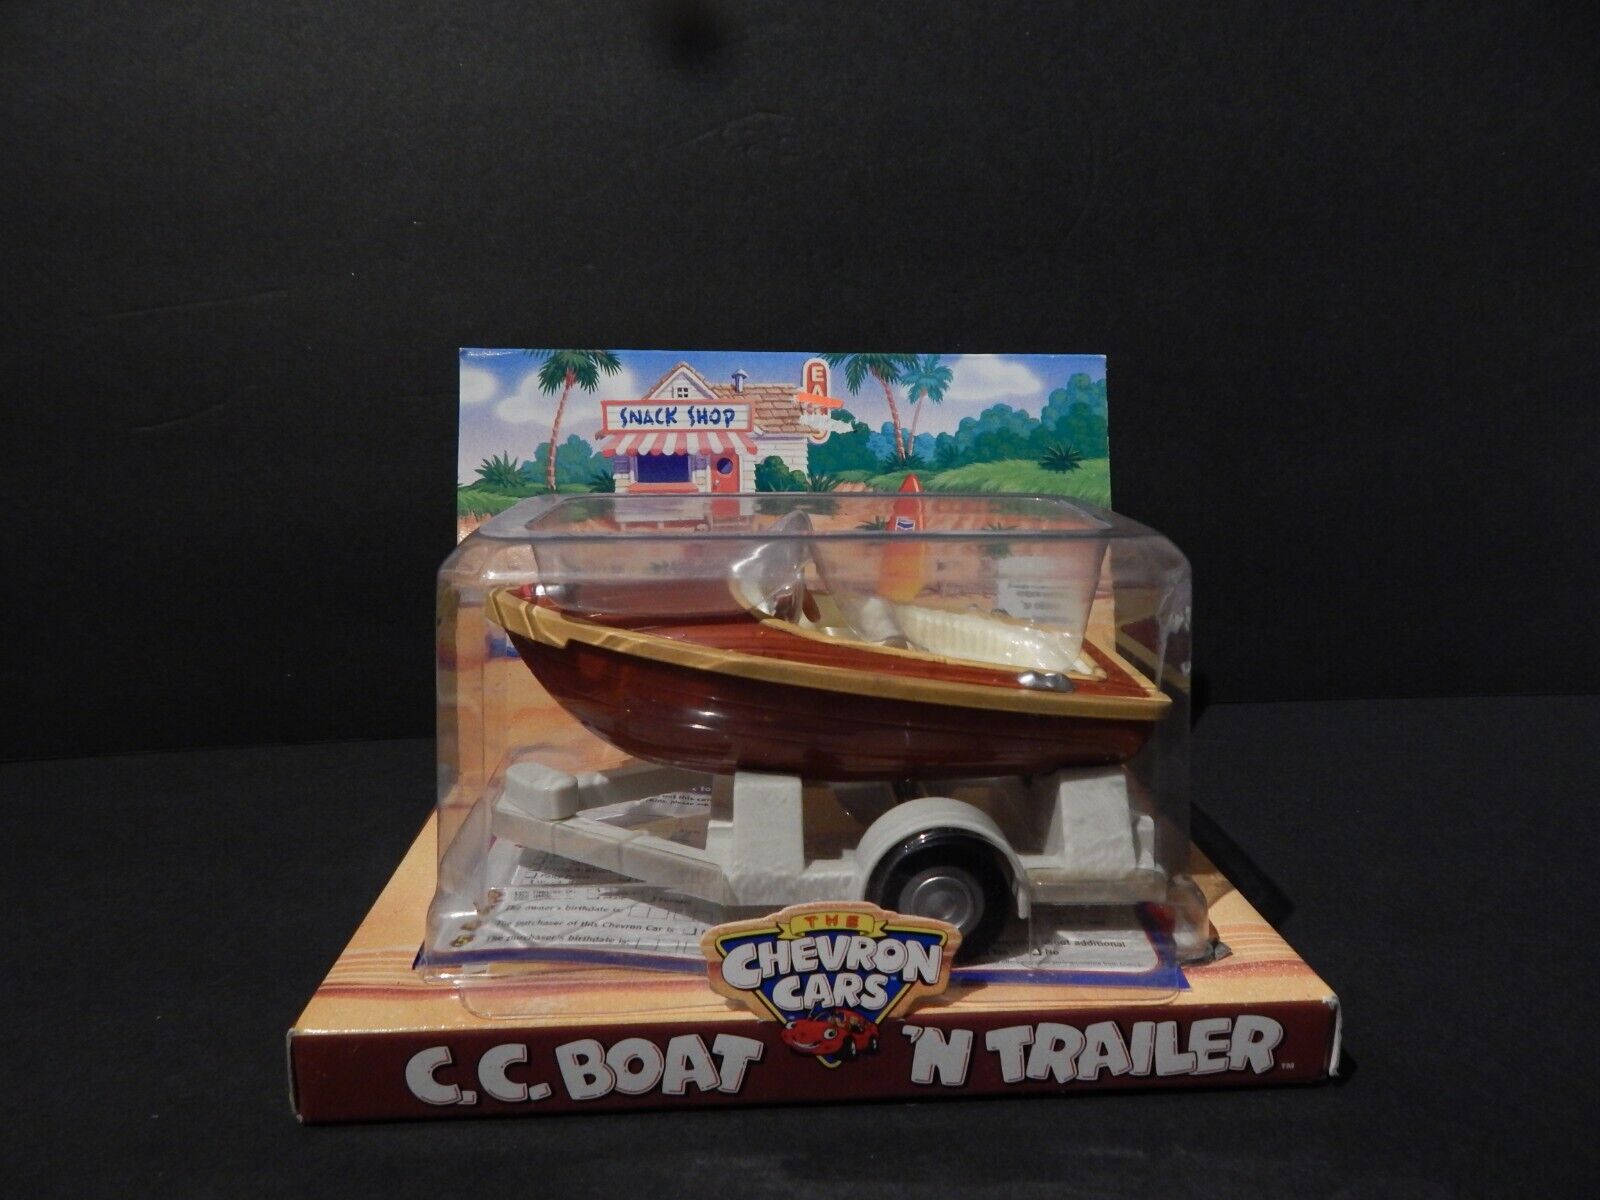 1999 Chevron Cars C.C. Boat N Trailer